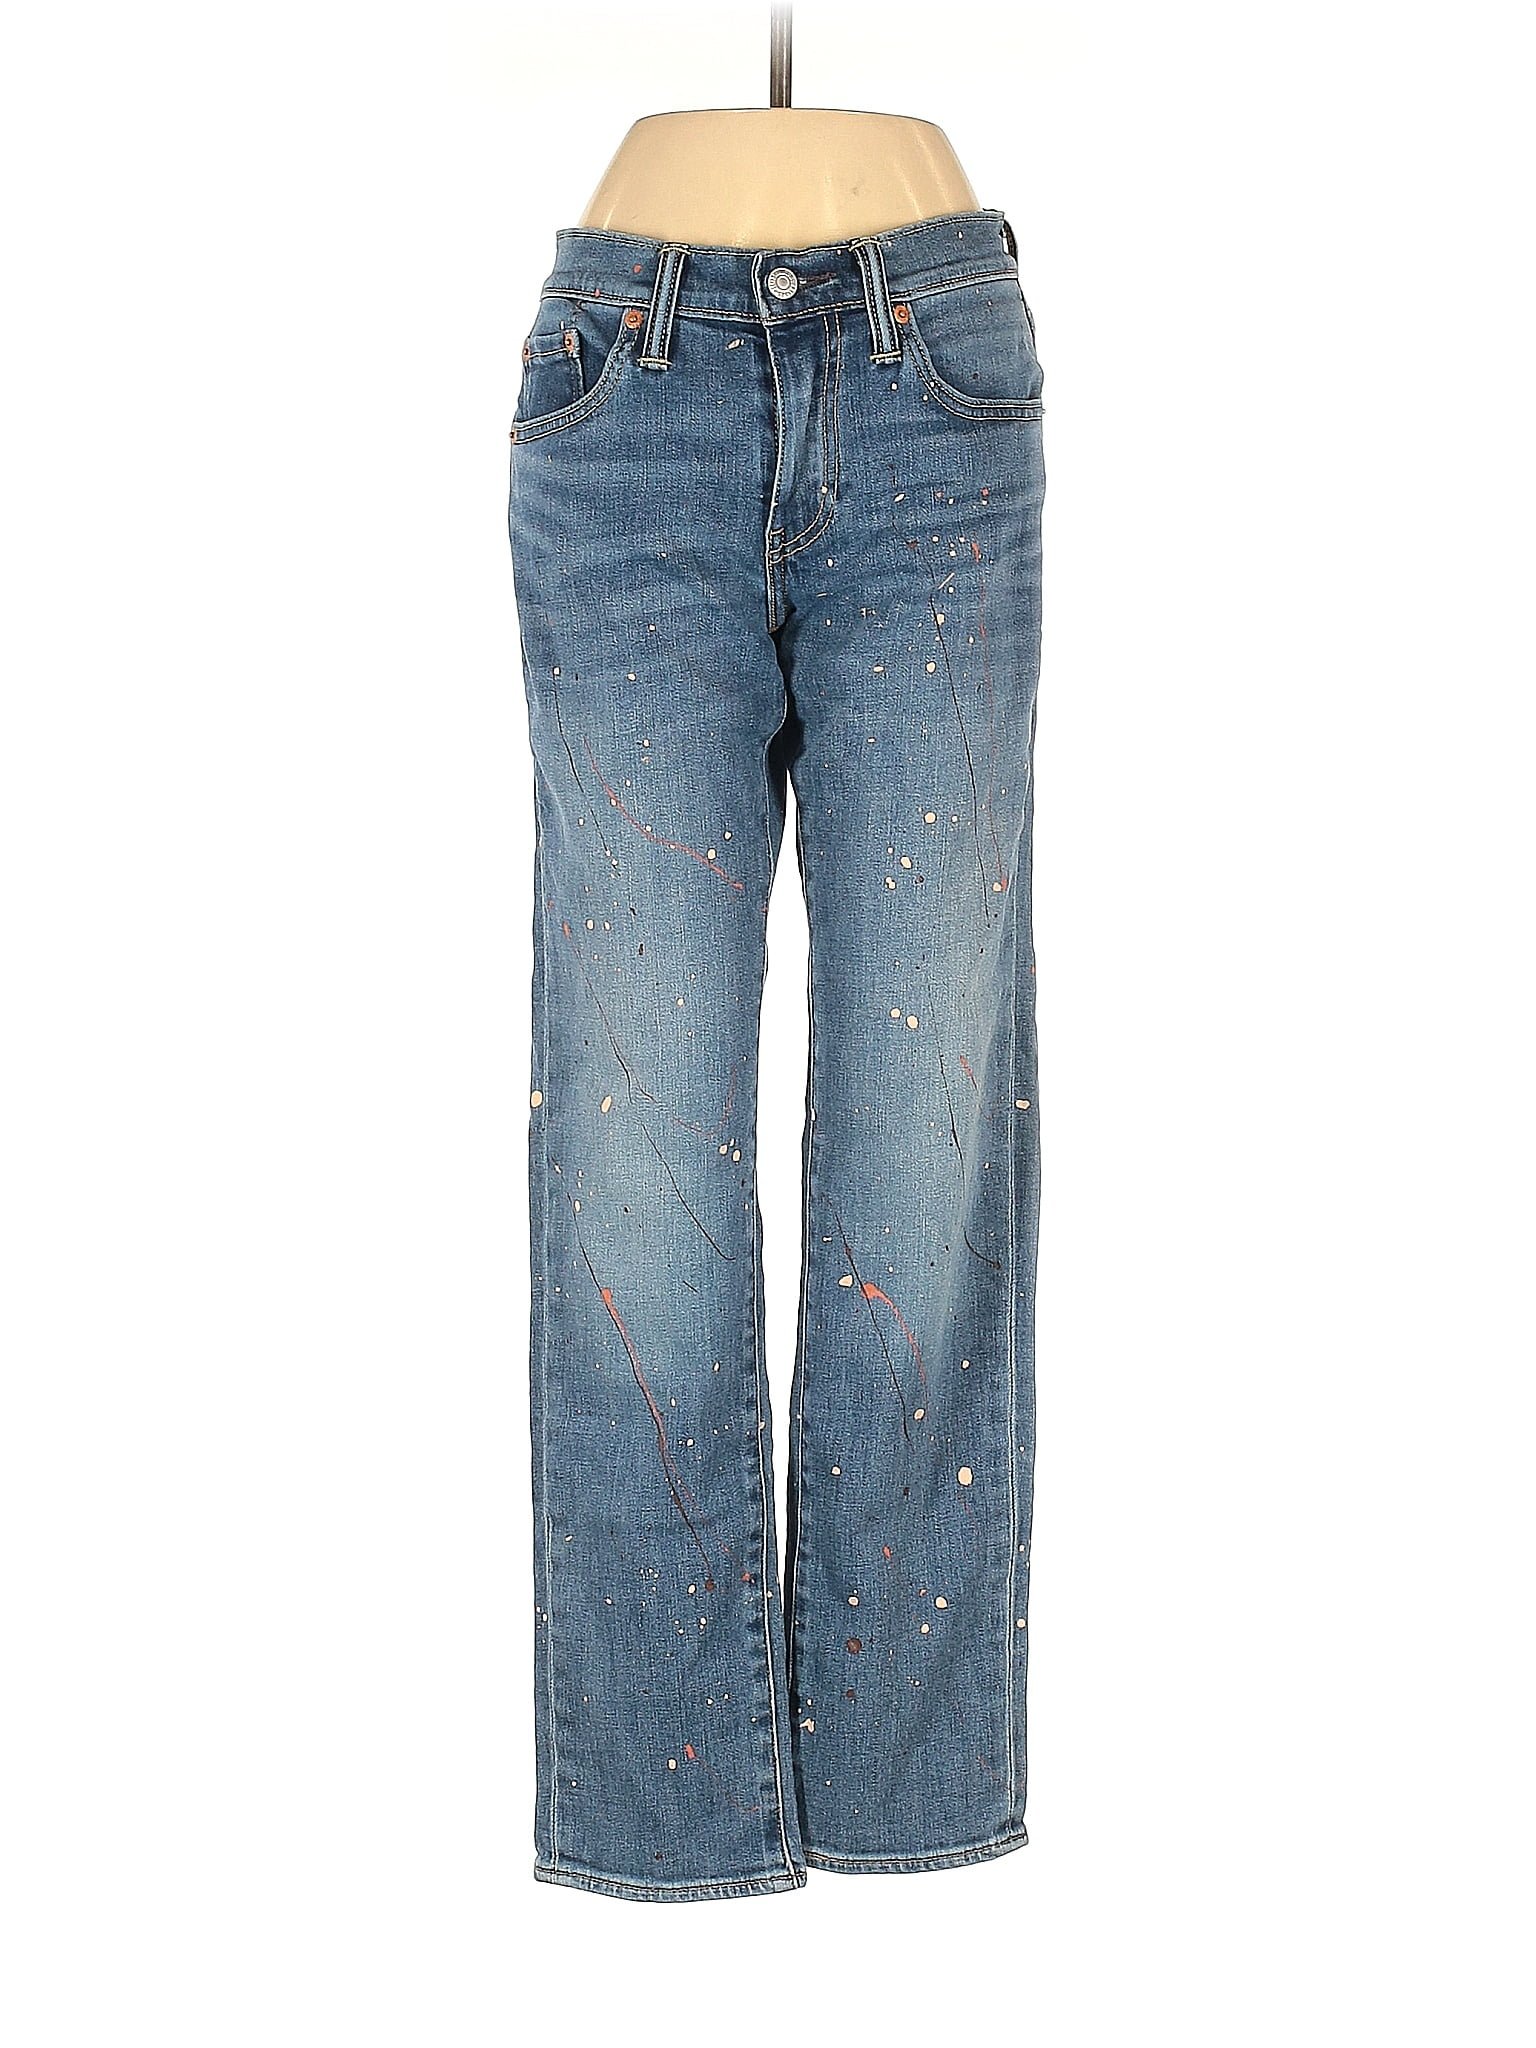 Levi's Blue Jeans 28 Waist - 60% off | thredUP